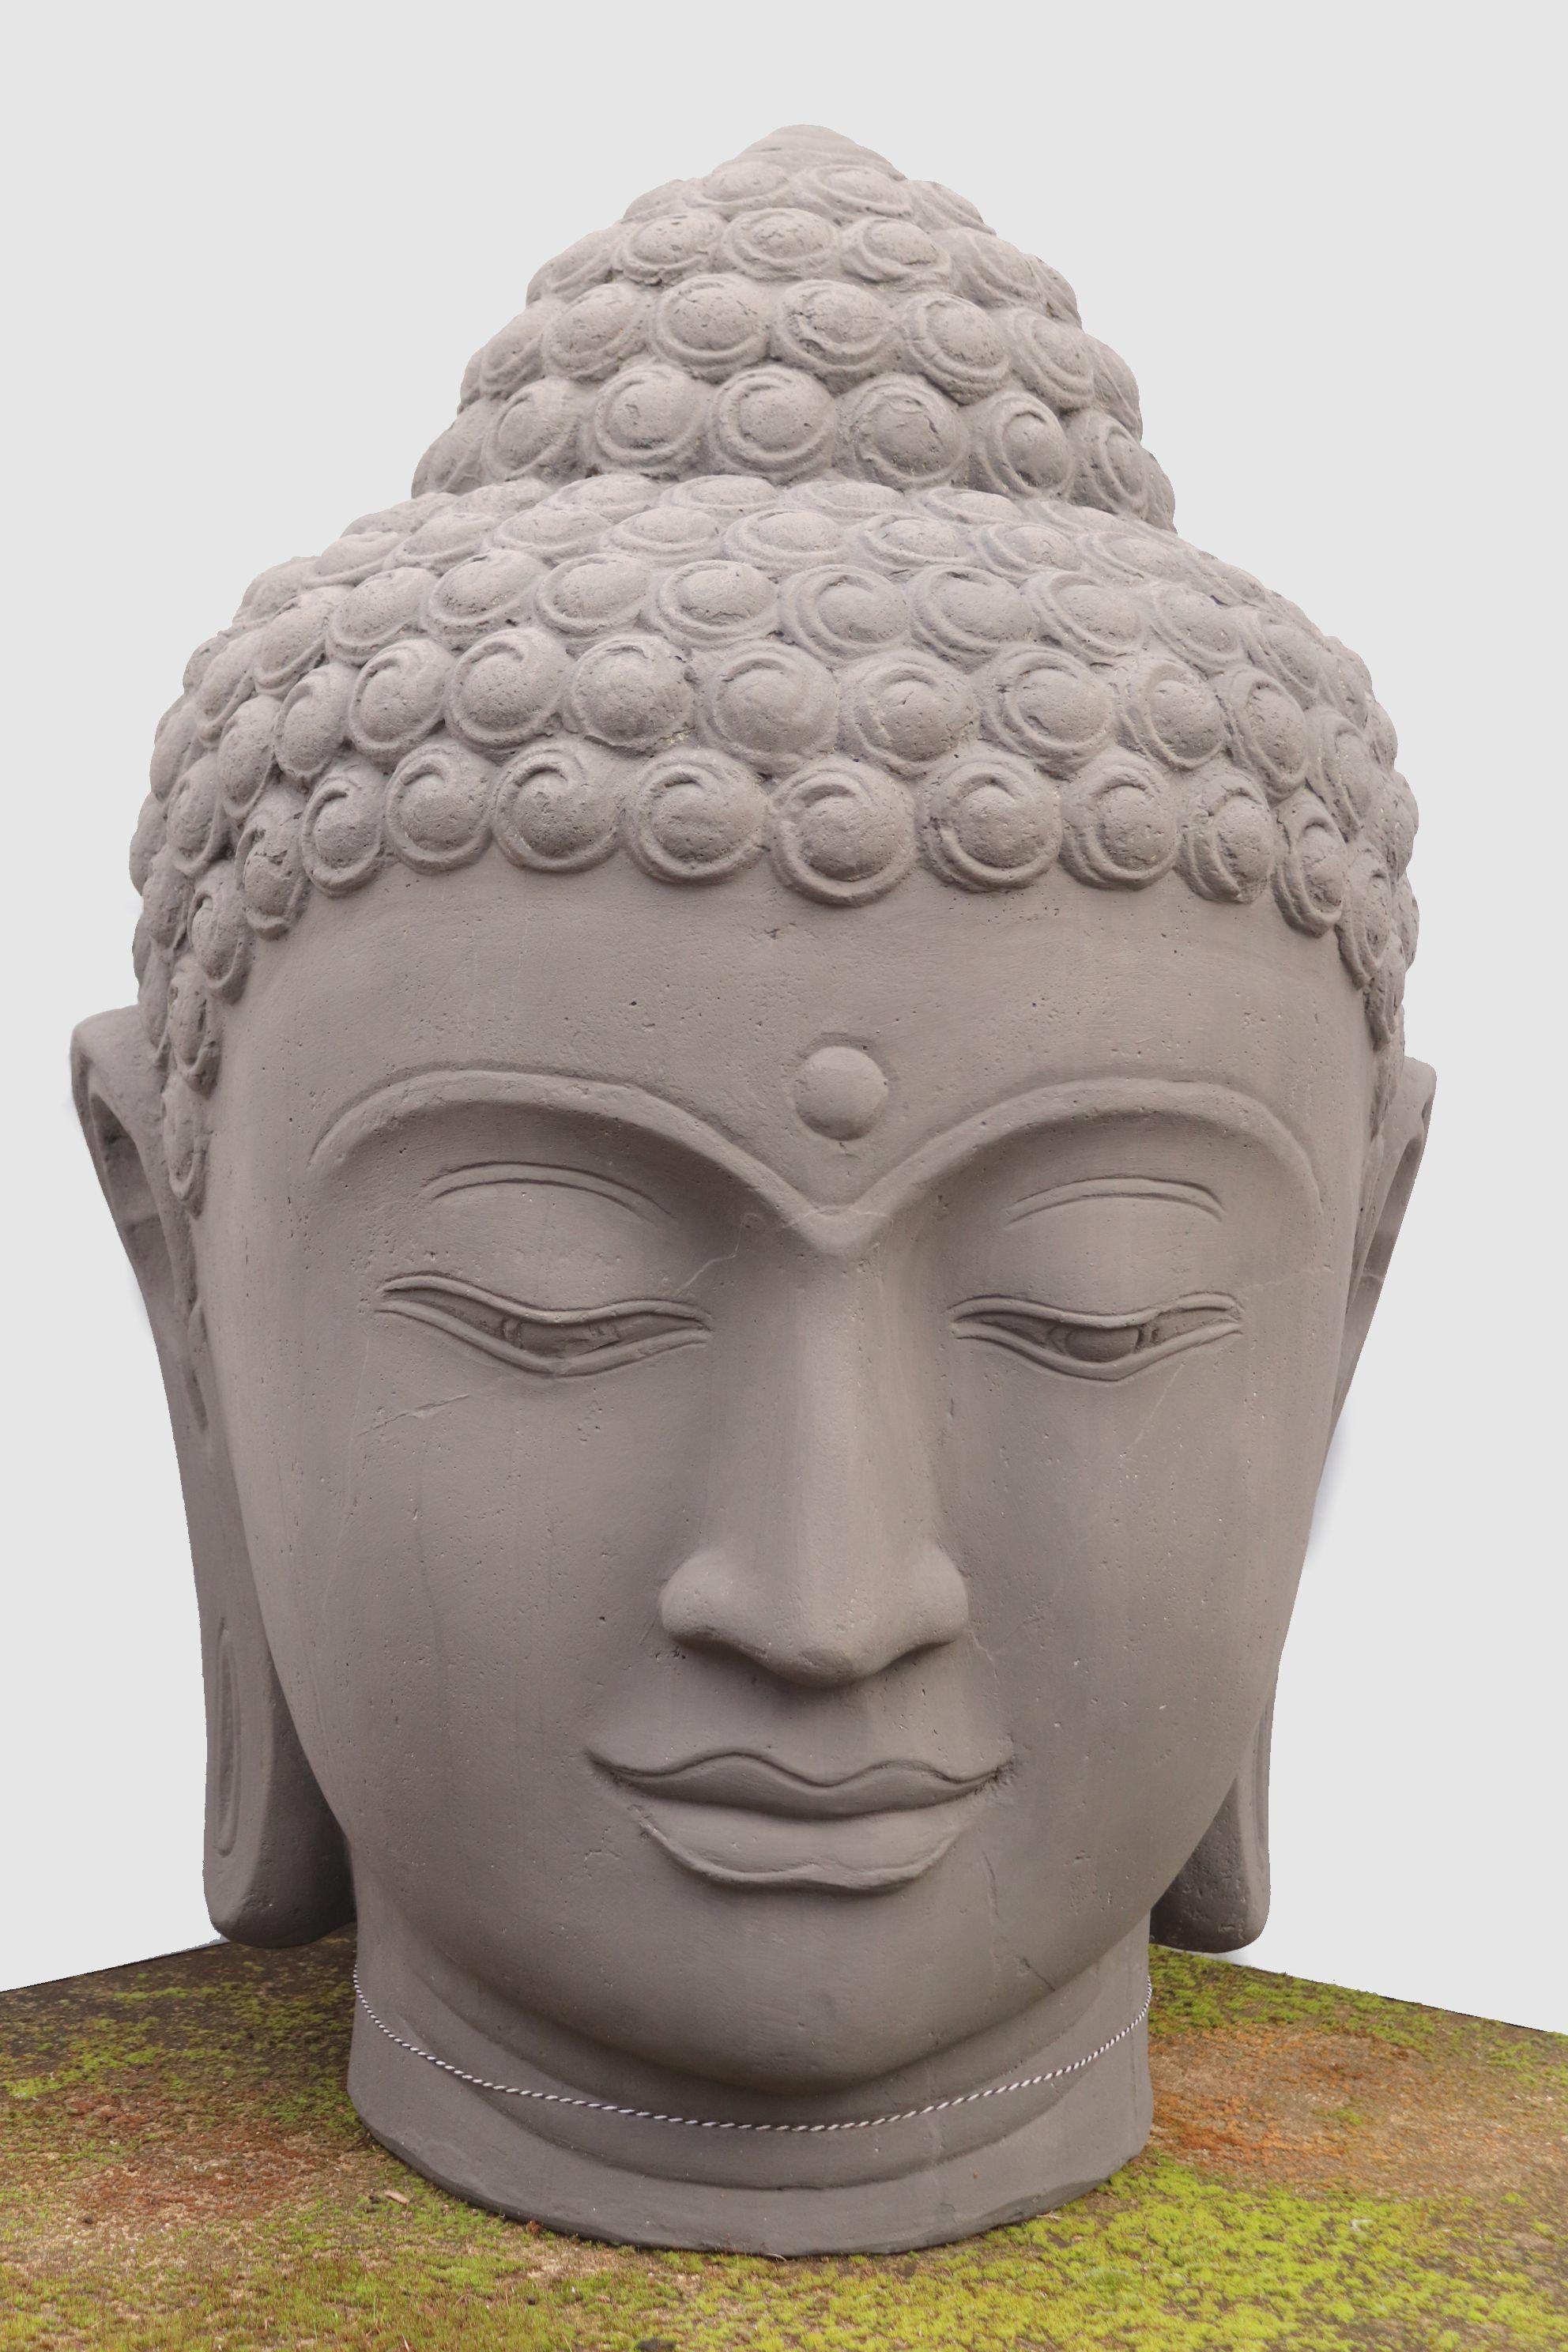 NEW - Cast Stone Buddha Head